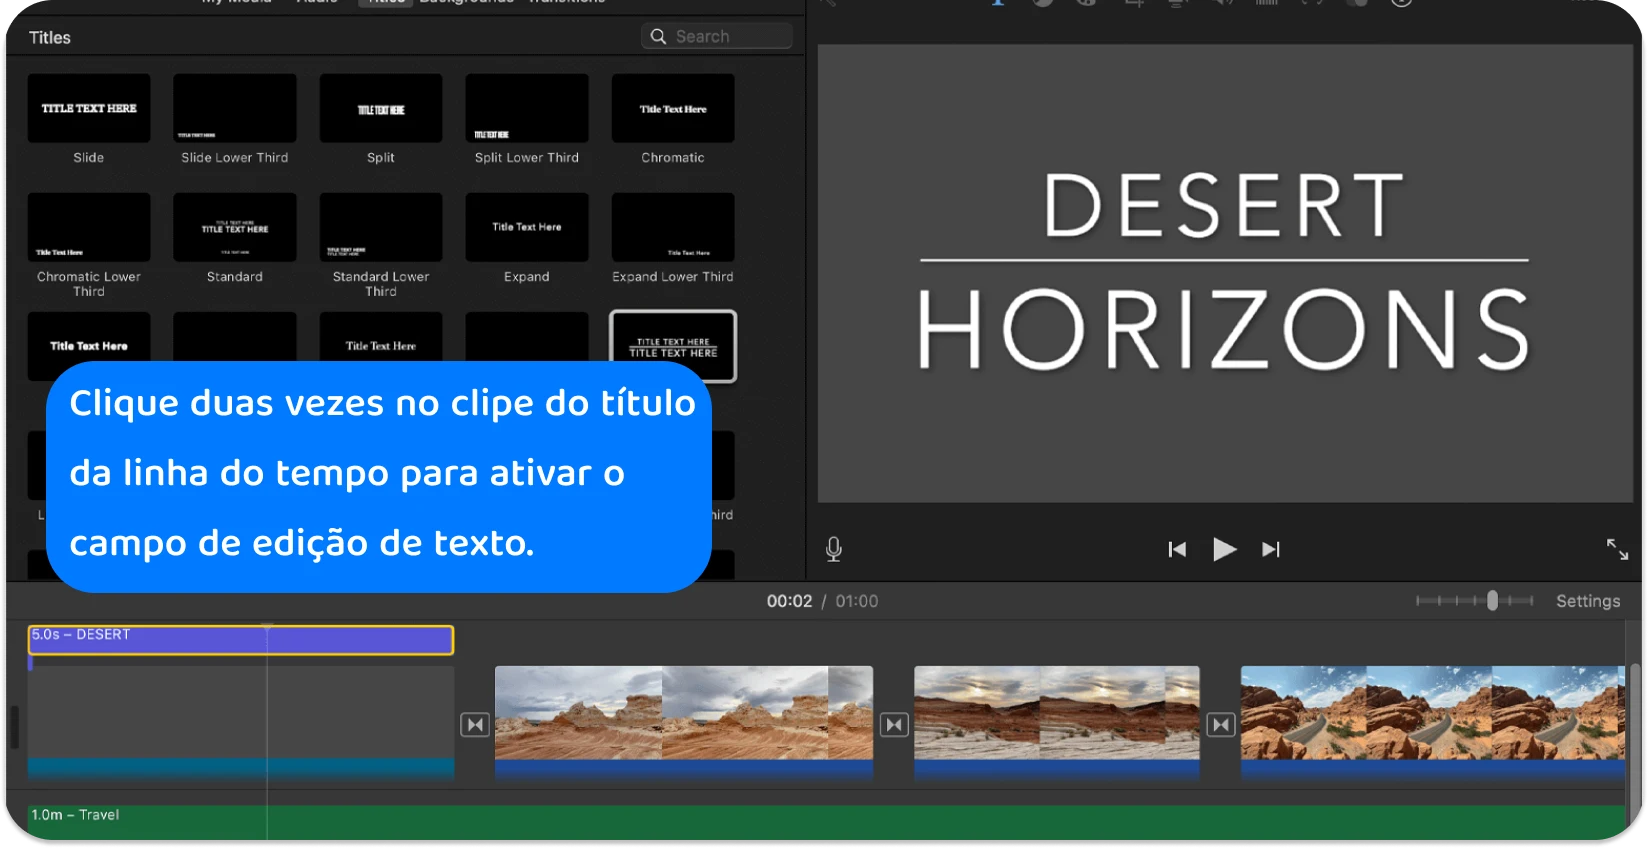 A interface iMovie Títulos exibe uma variedade de estilos e formatos de texto para adicionar títulos profissionais a projetos de vídeo.
